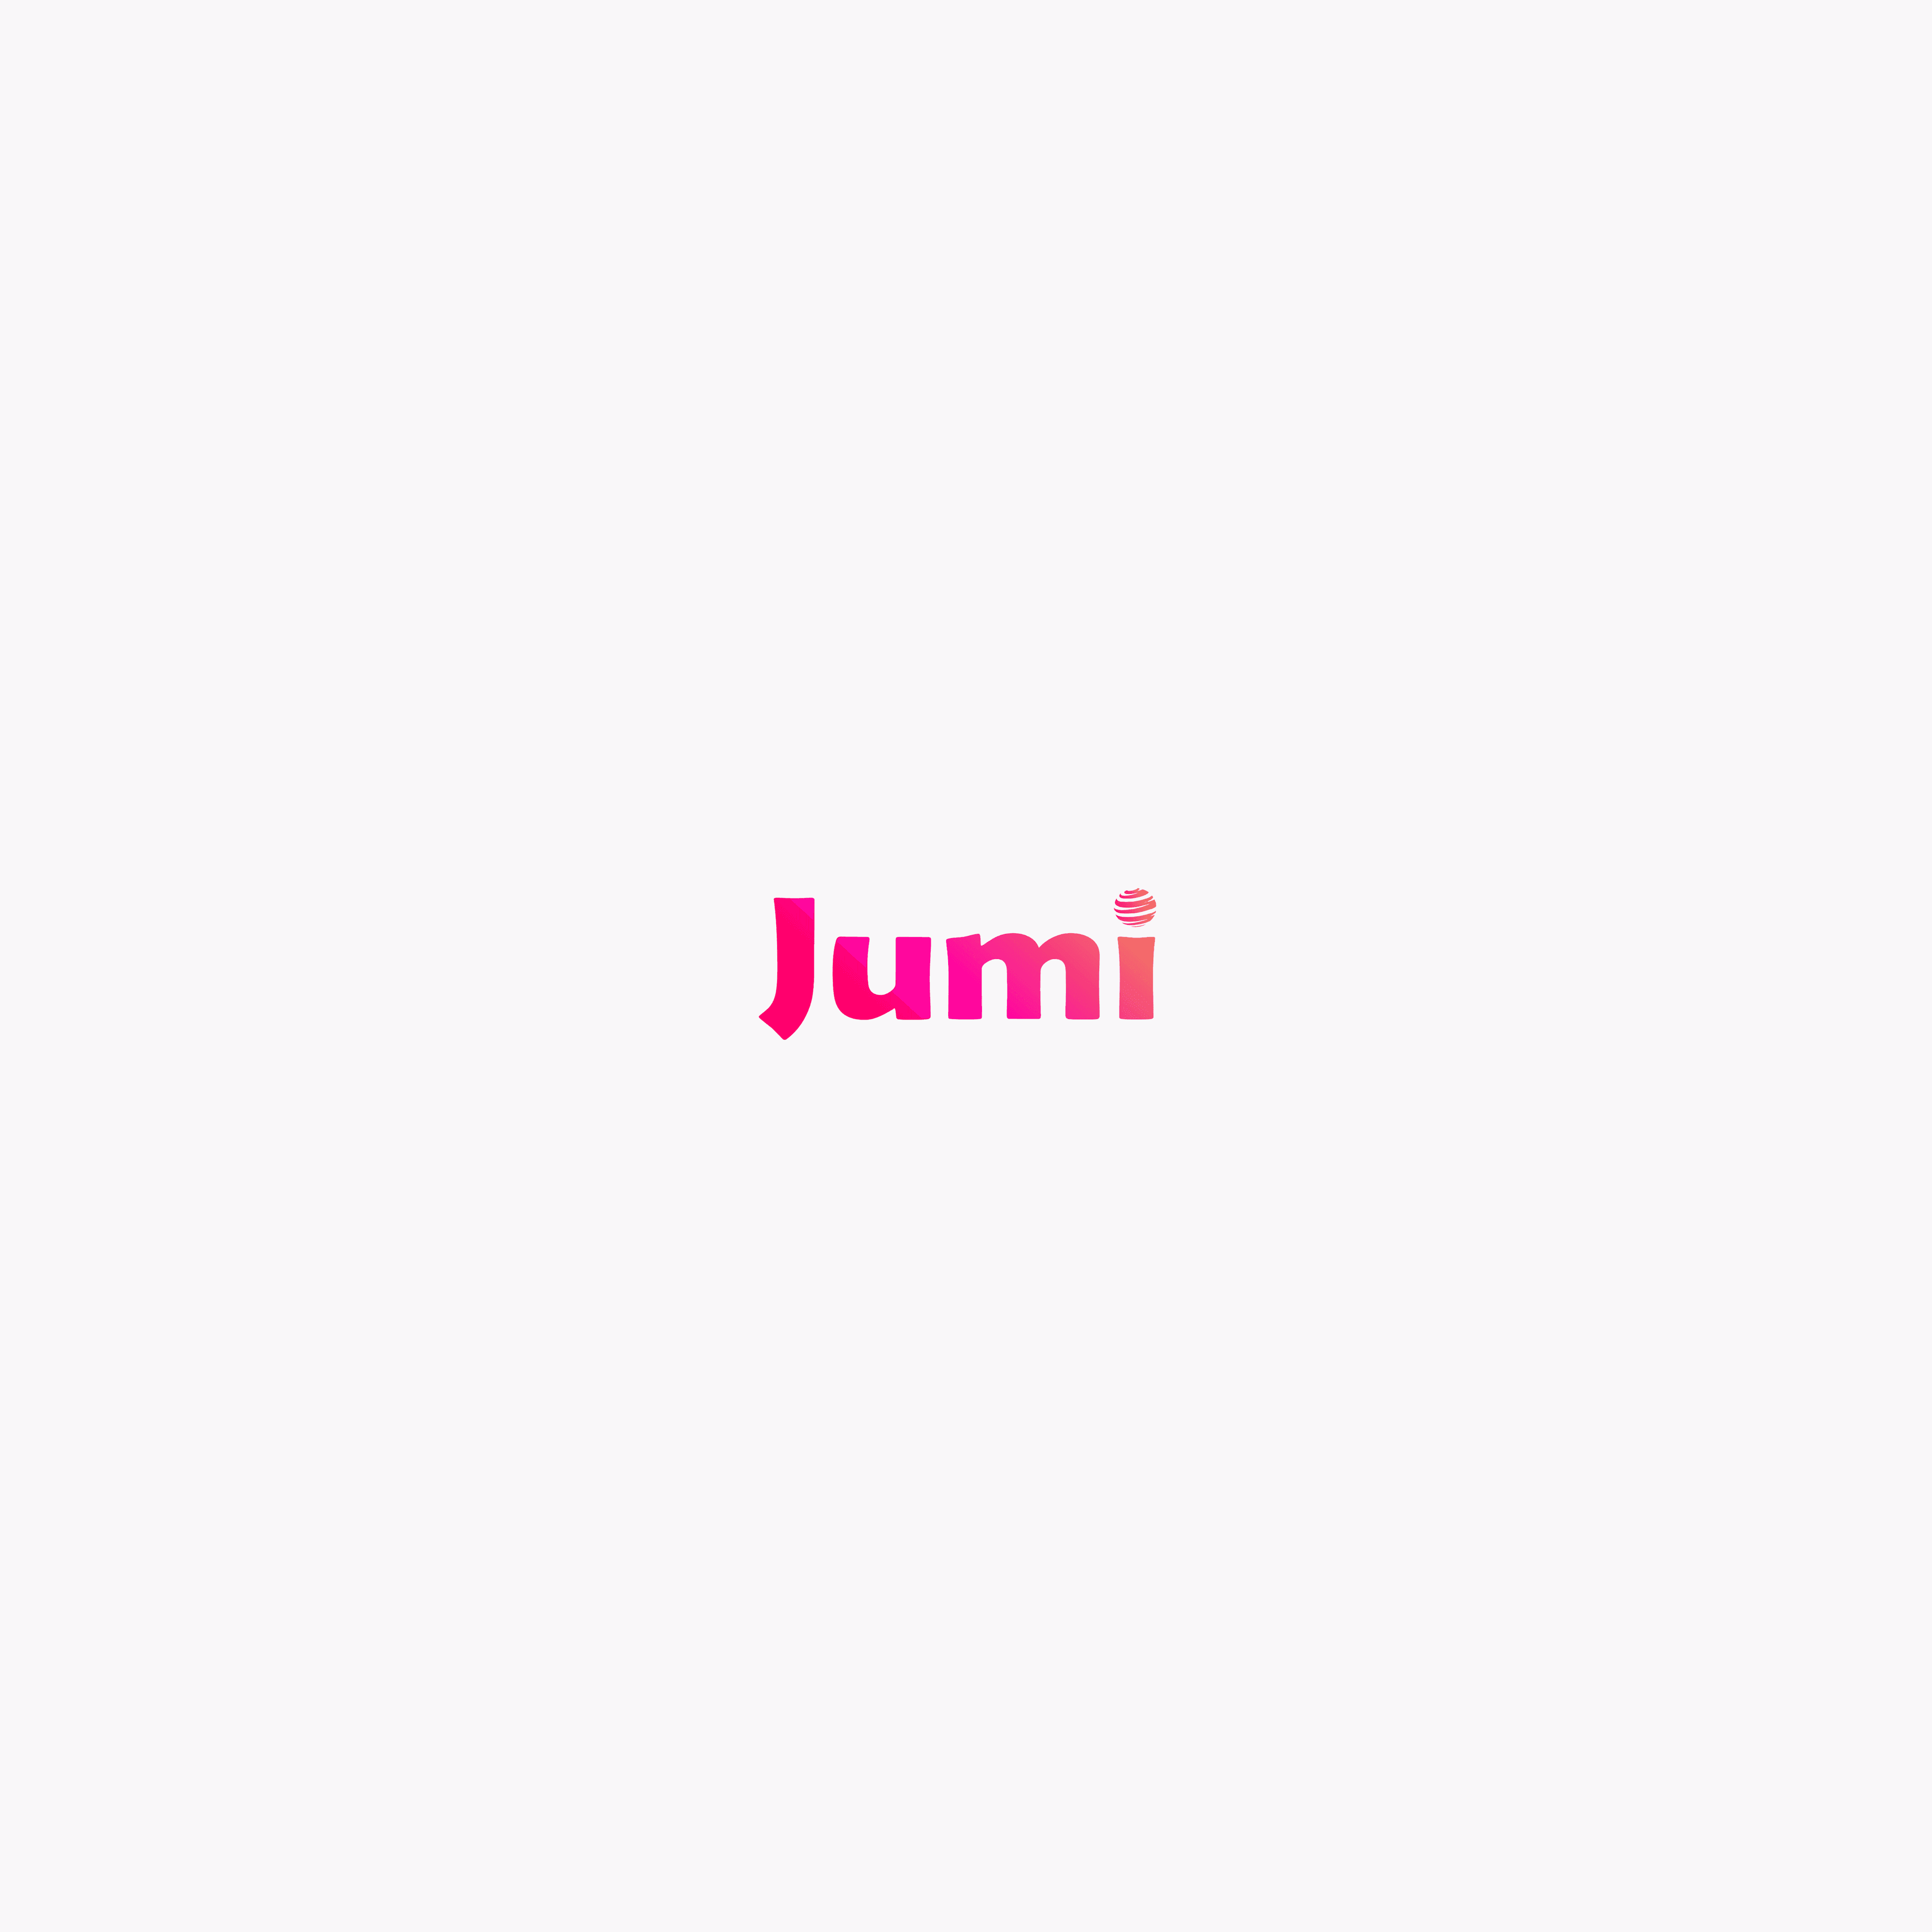 Jumi_Music 横幅